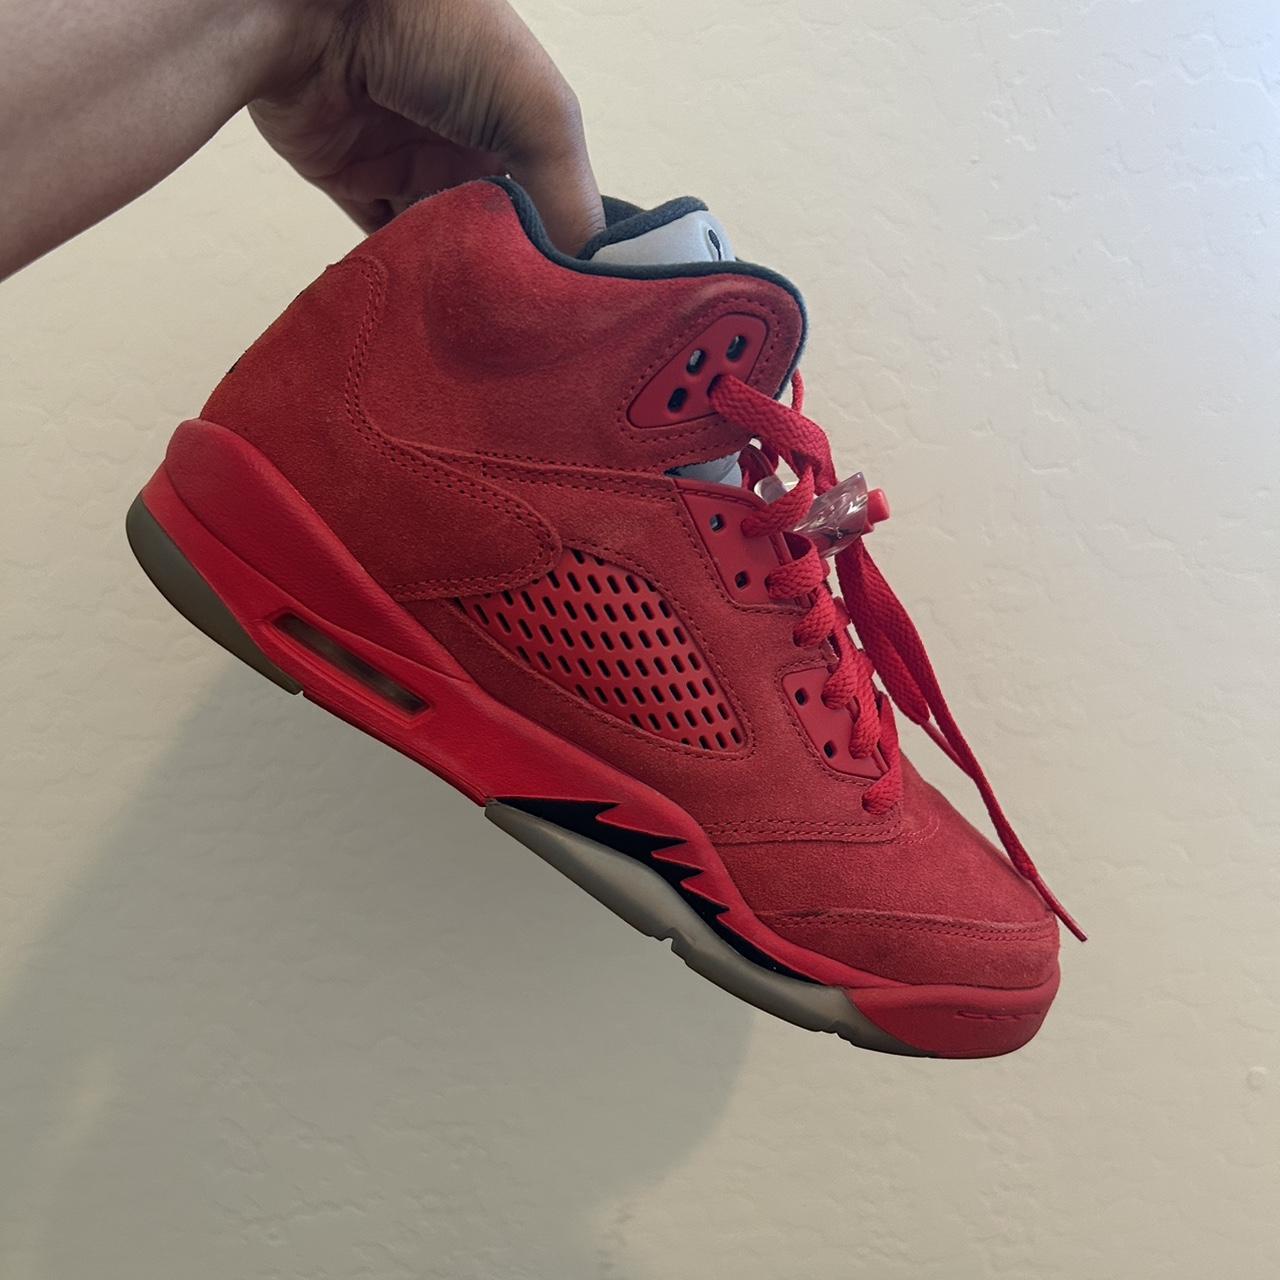 Air Jordan 5 Retro Red Suede